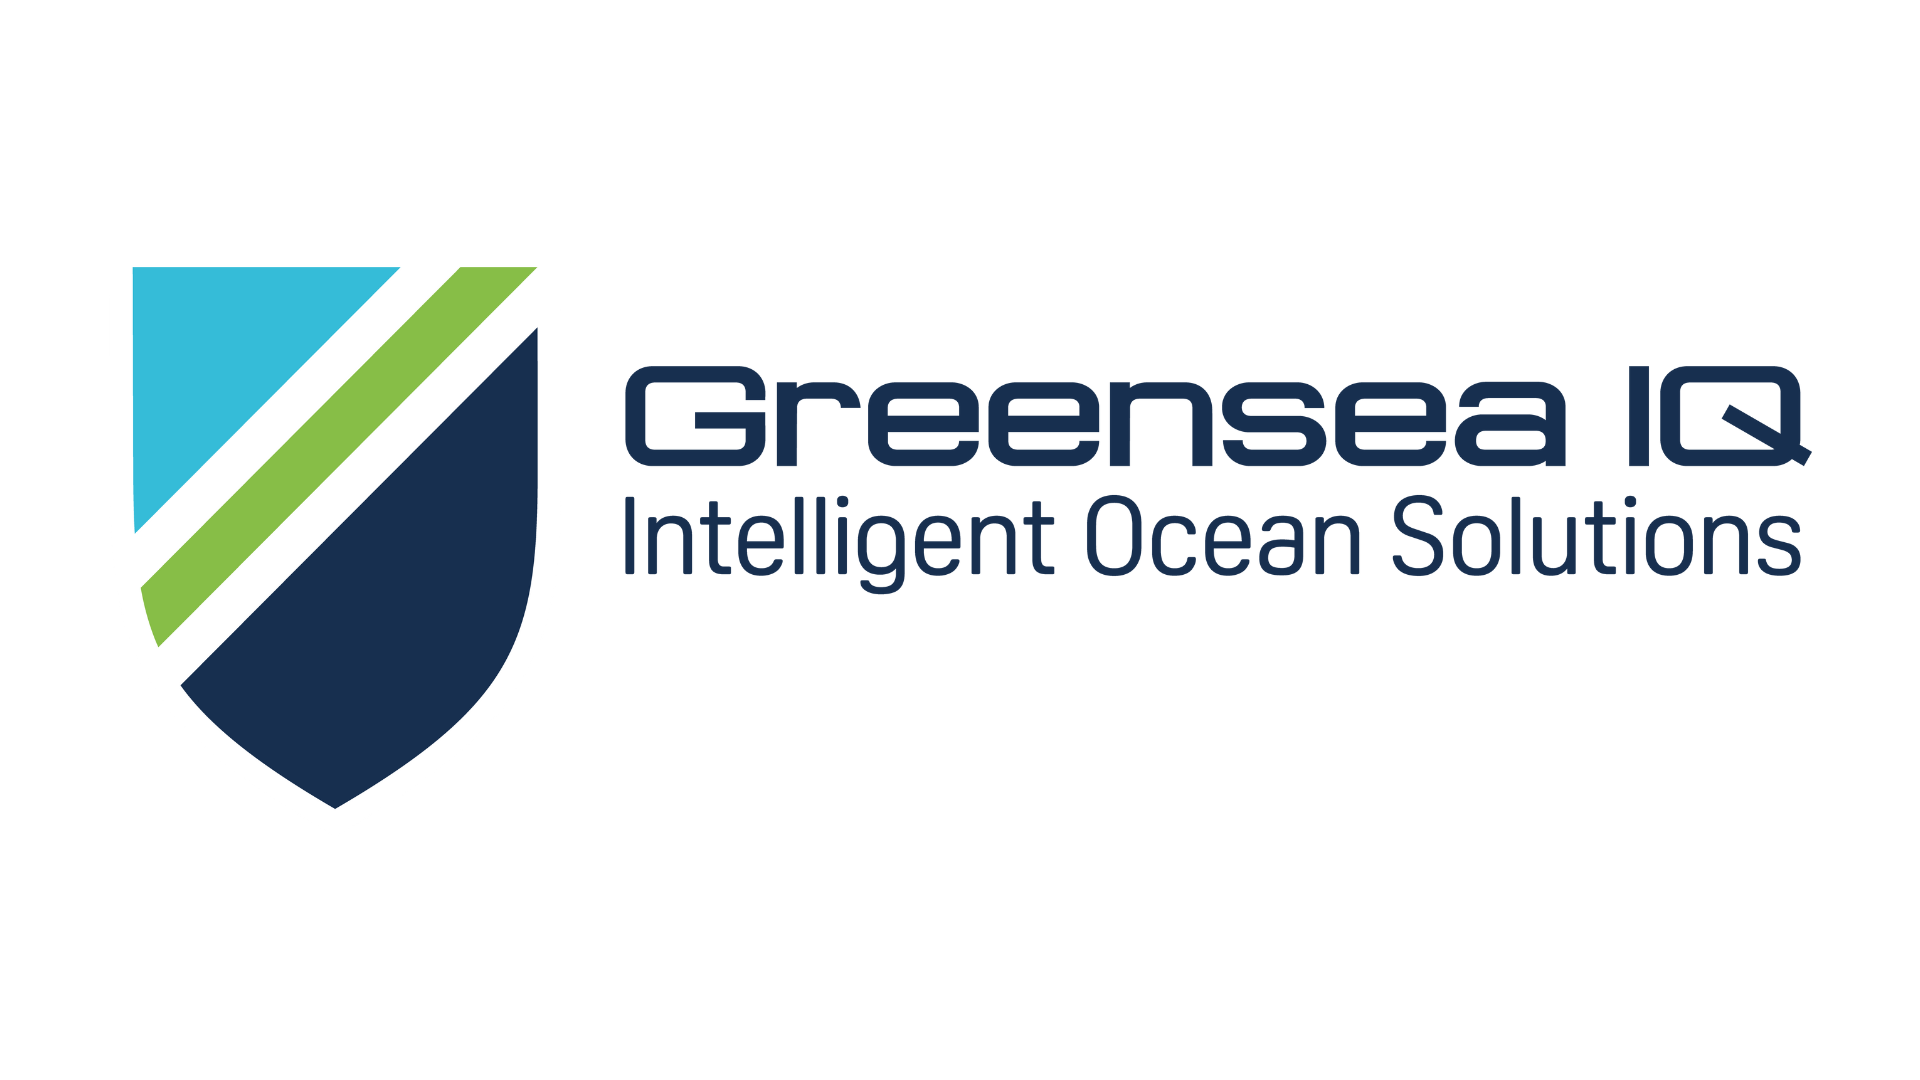 Greensea IQ